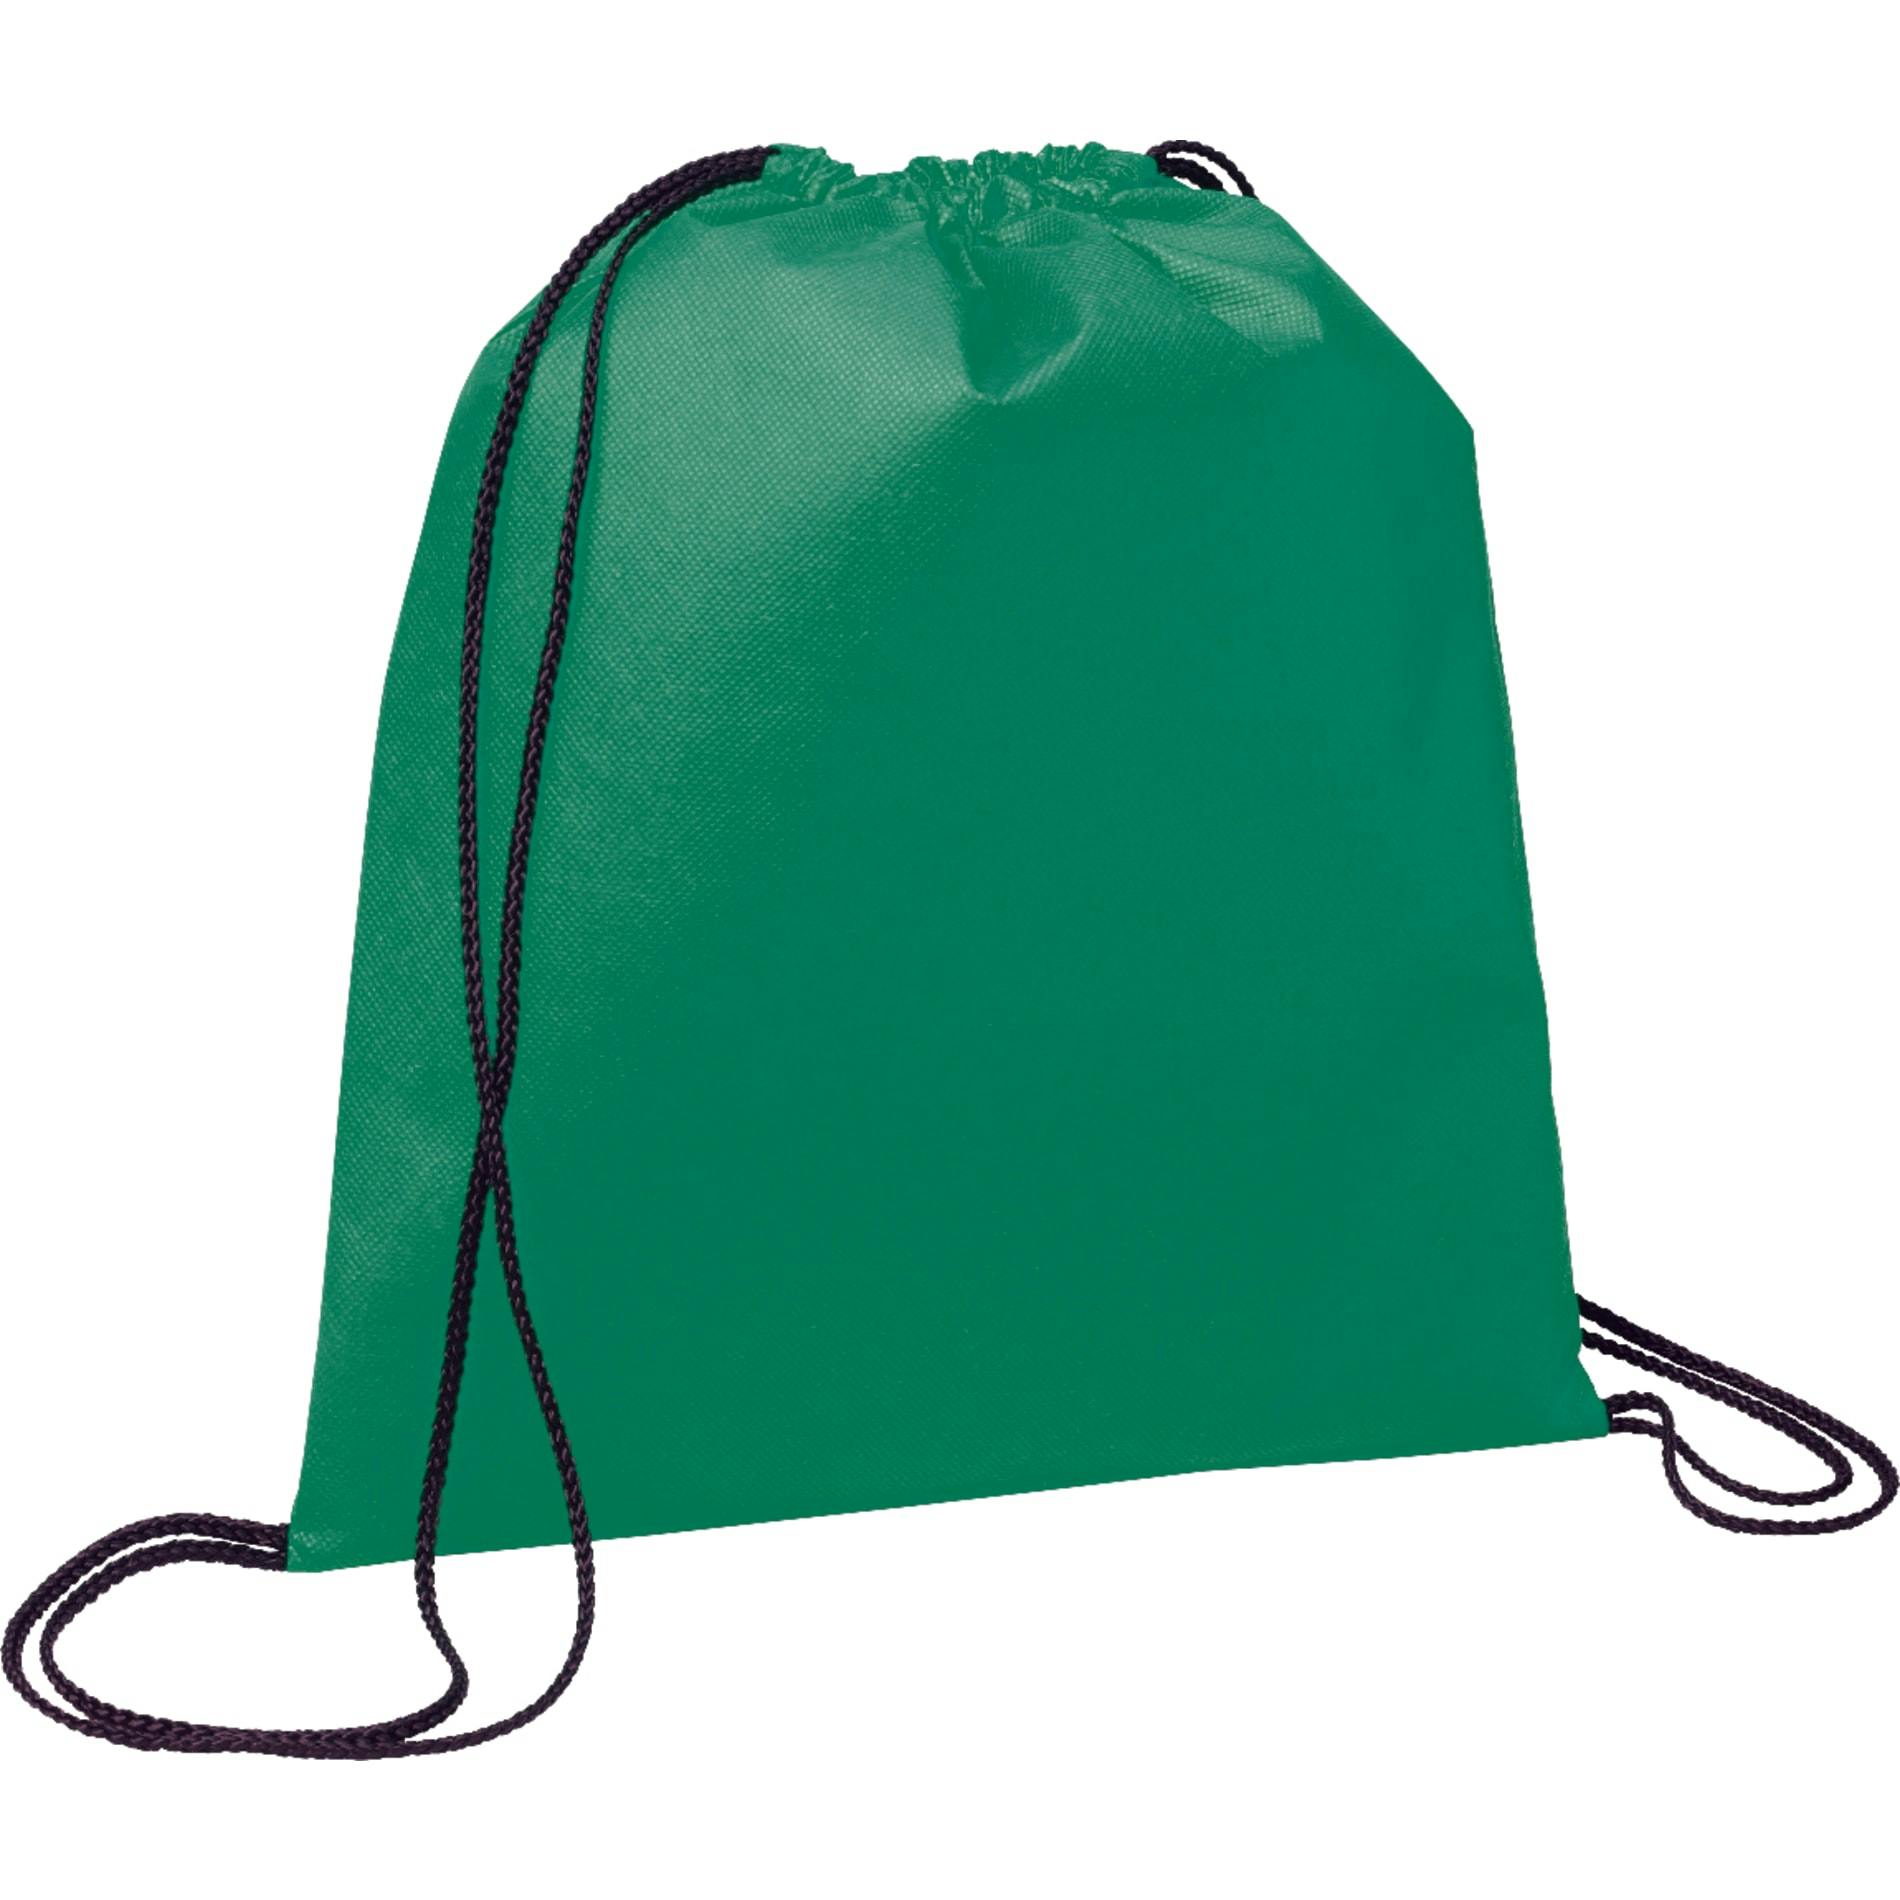 Evergreen Non-Woven Drawstring Bag - additional Image 3